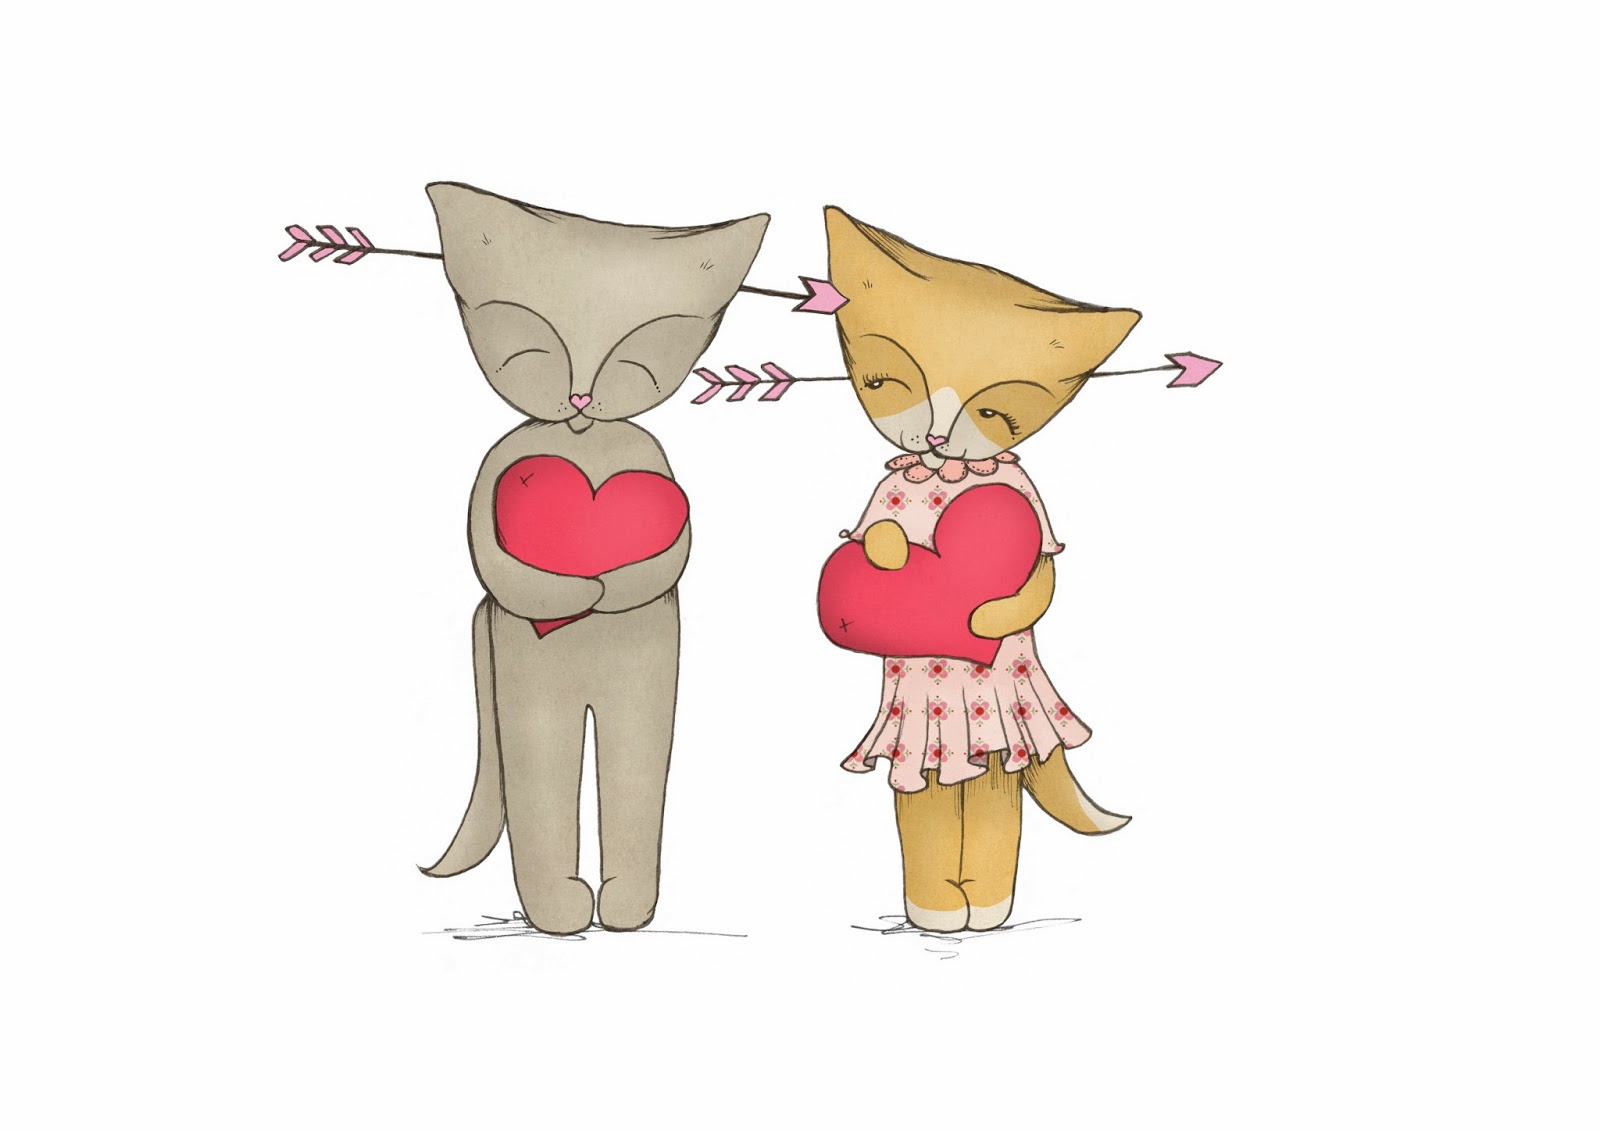 https://www.etsy.com/listing/176597471/cat-art-print-valentine-valentines-day?ref=shop_home_active_13